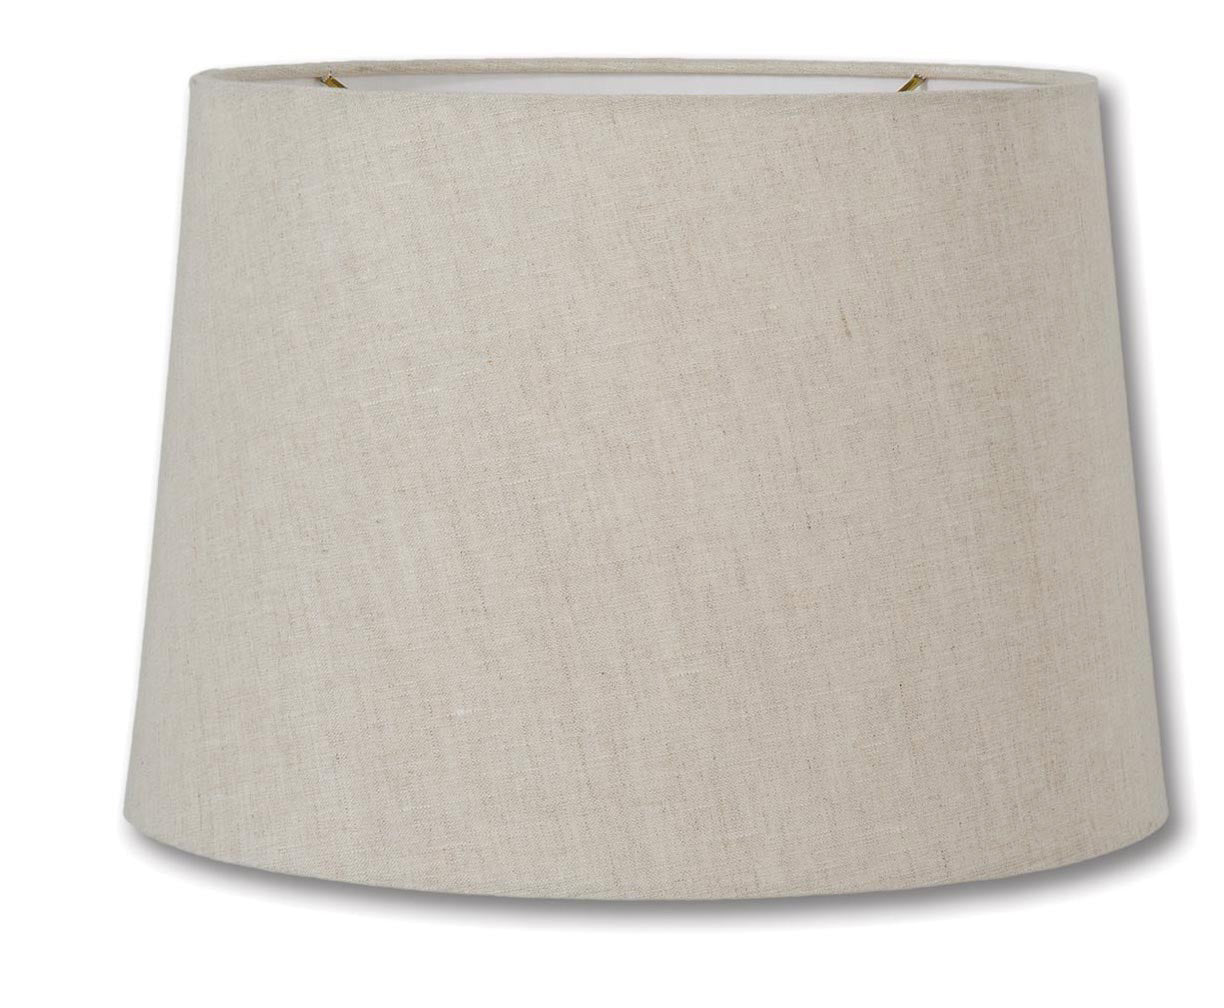 Retro Drum Lamp Shades - Natural Color, 100% Fine Linen Material